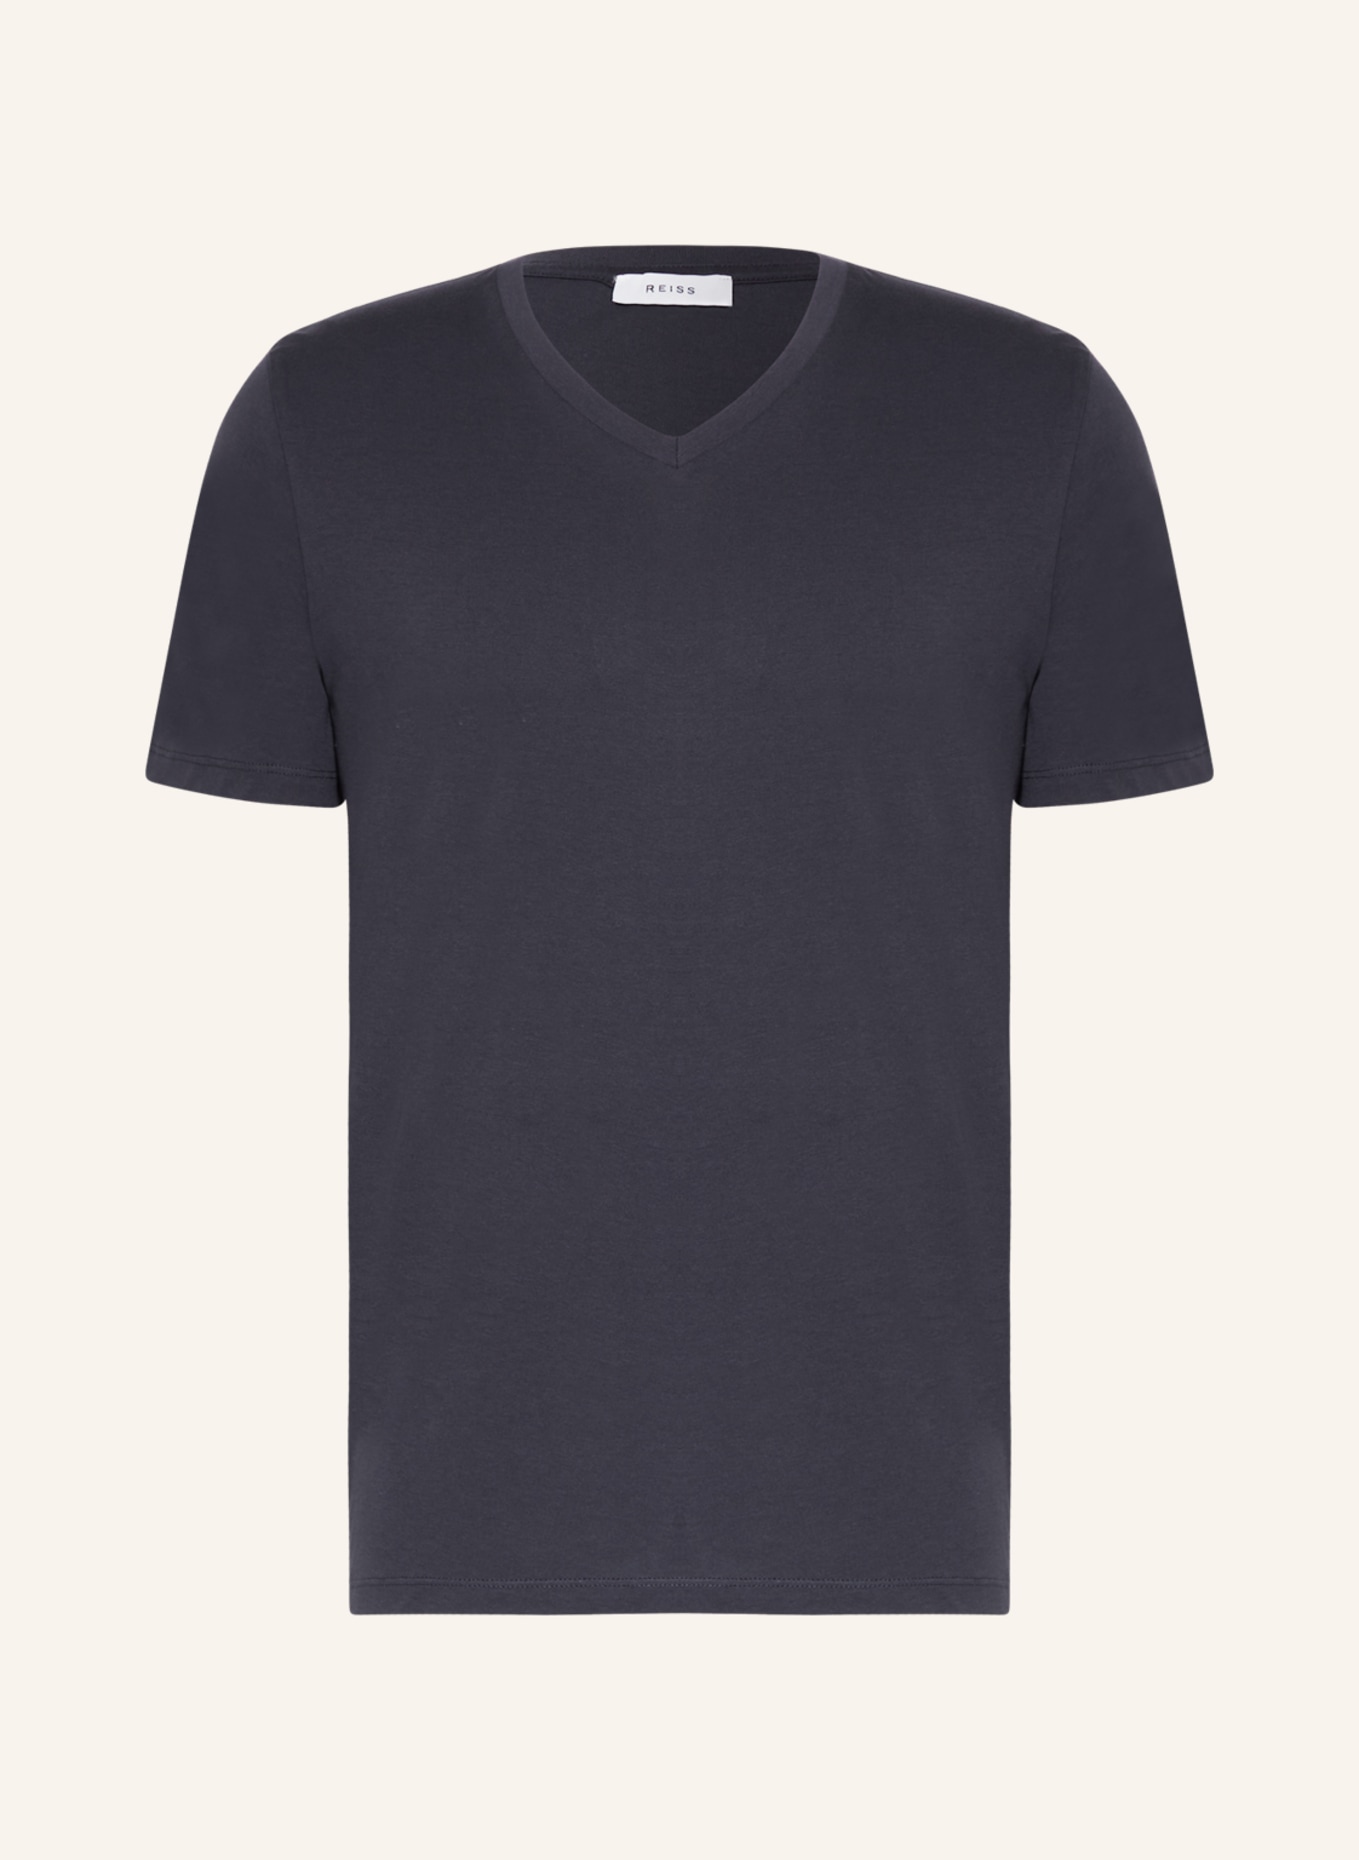 REISS T-Shirt DAYTON, Farbe: DUNKELBLAU (Bild 1)